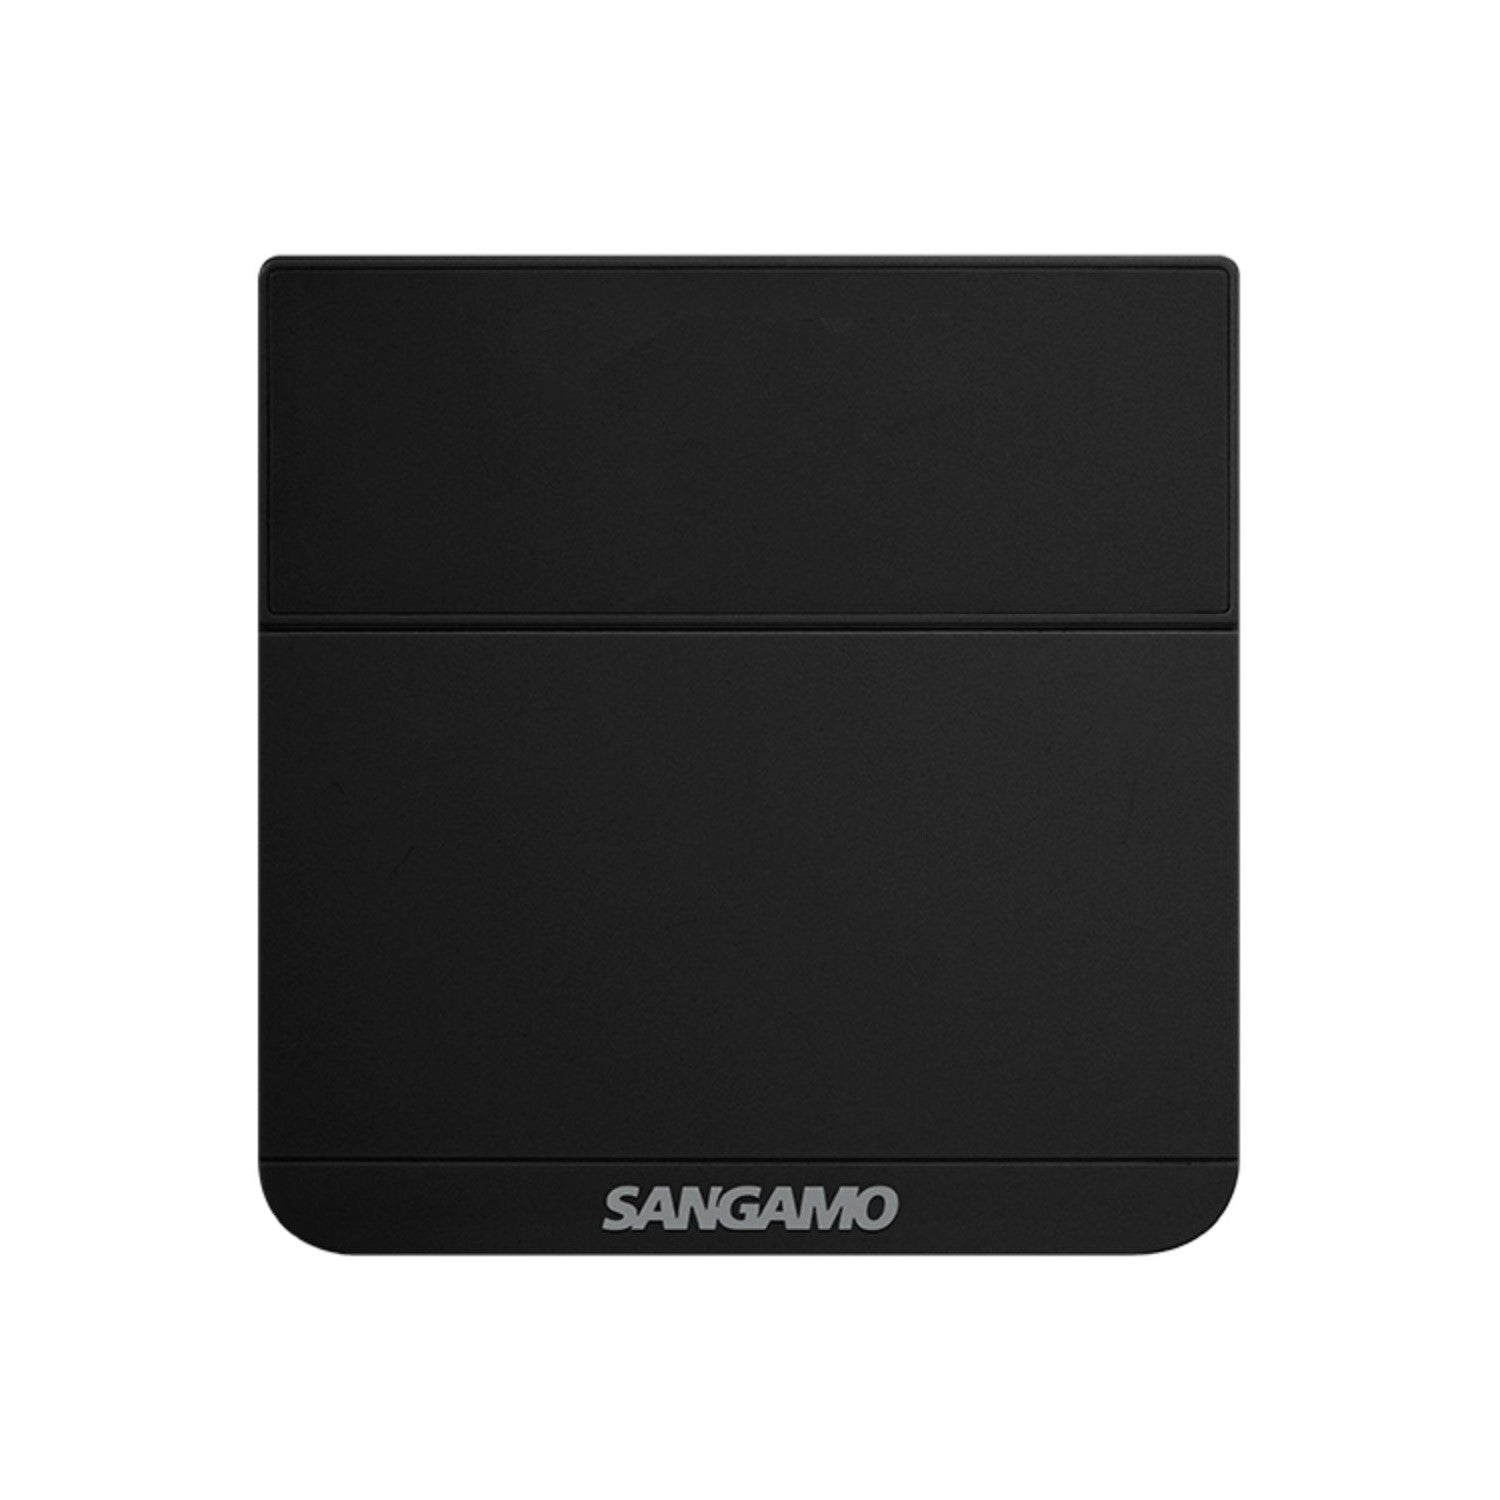 Sangamo Tamperproof Electronic Thermostat Black - CHPRSTATTB